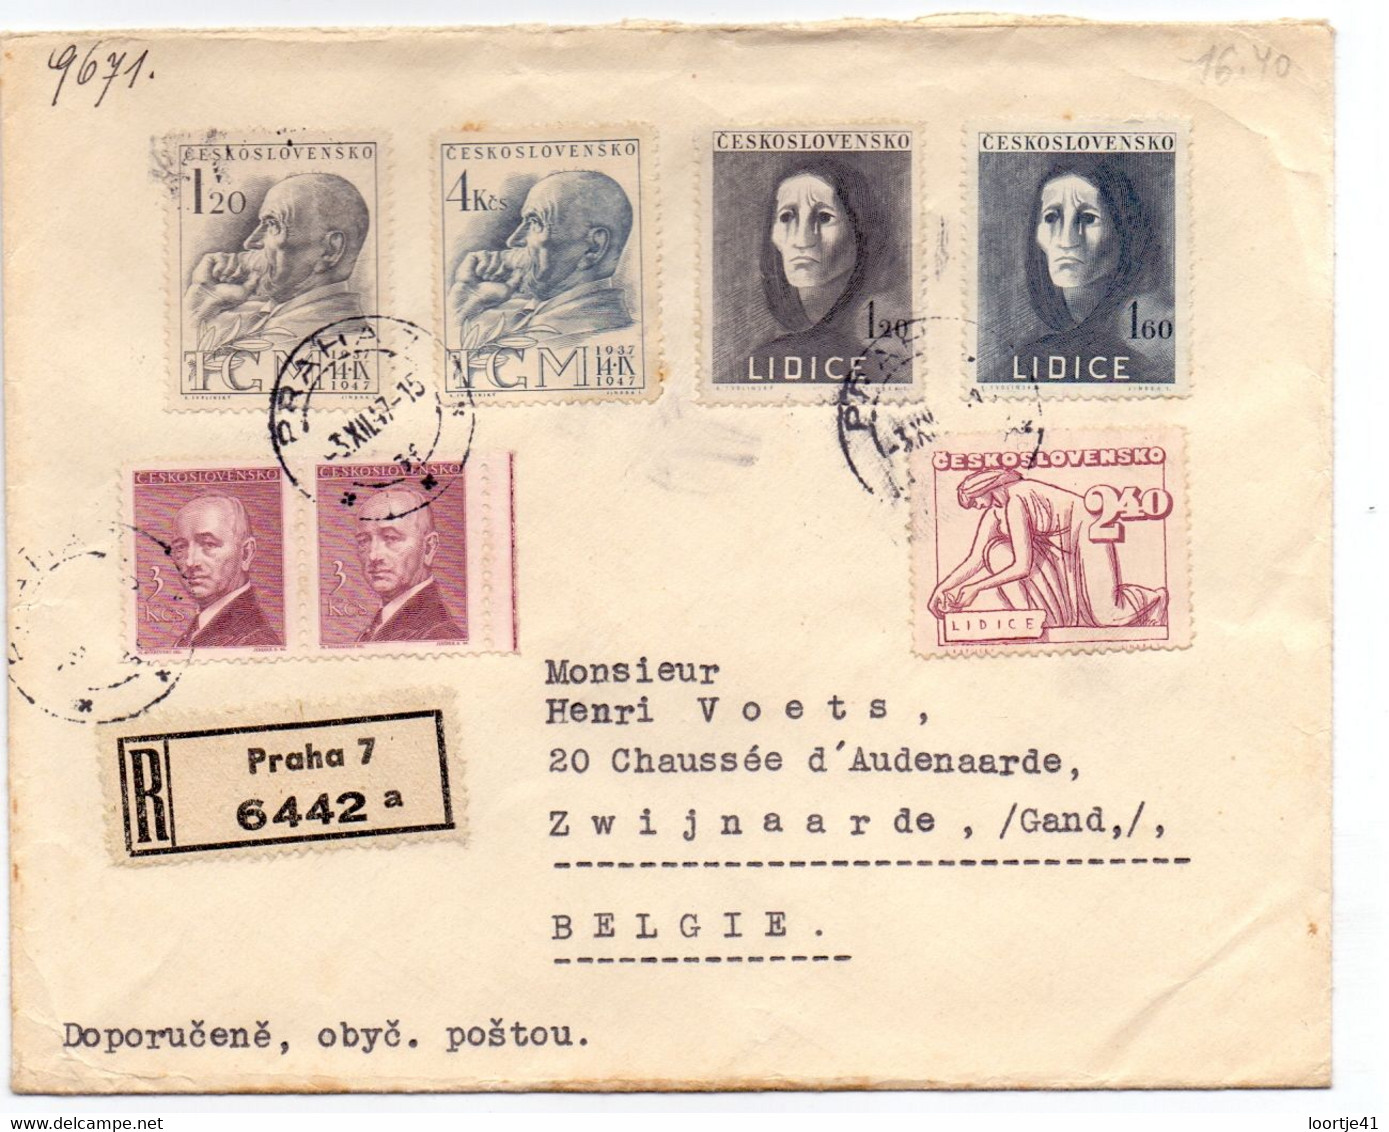 Omslag Enveloppe - Praha Ceskoslovensko Naar Gand Gent - Recommandé Stempel Cachet 1947 - Omslagen